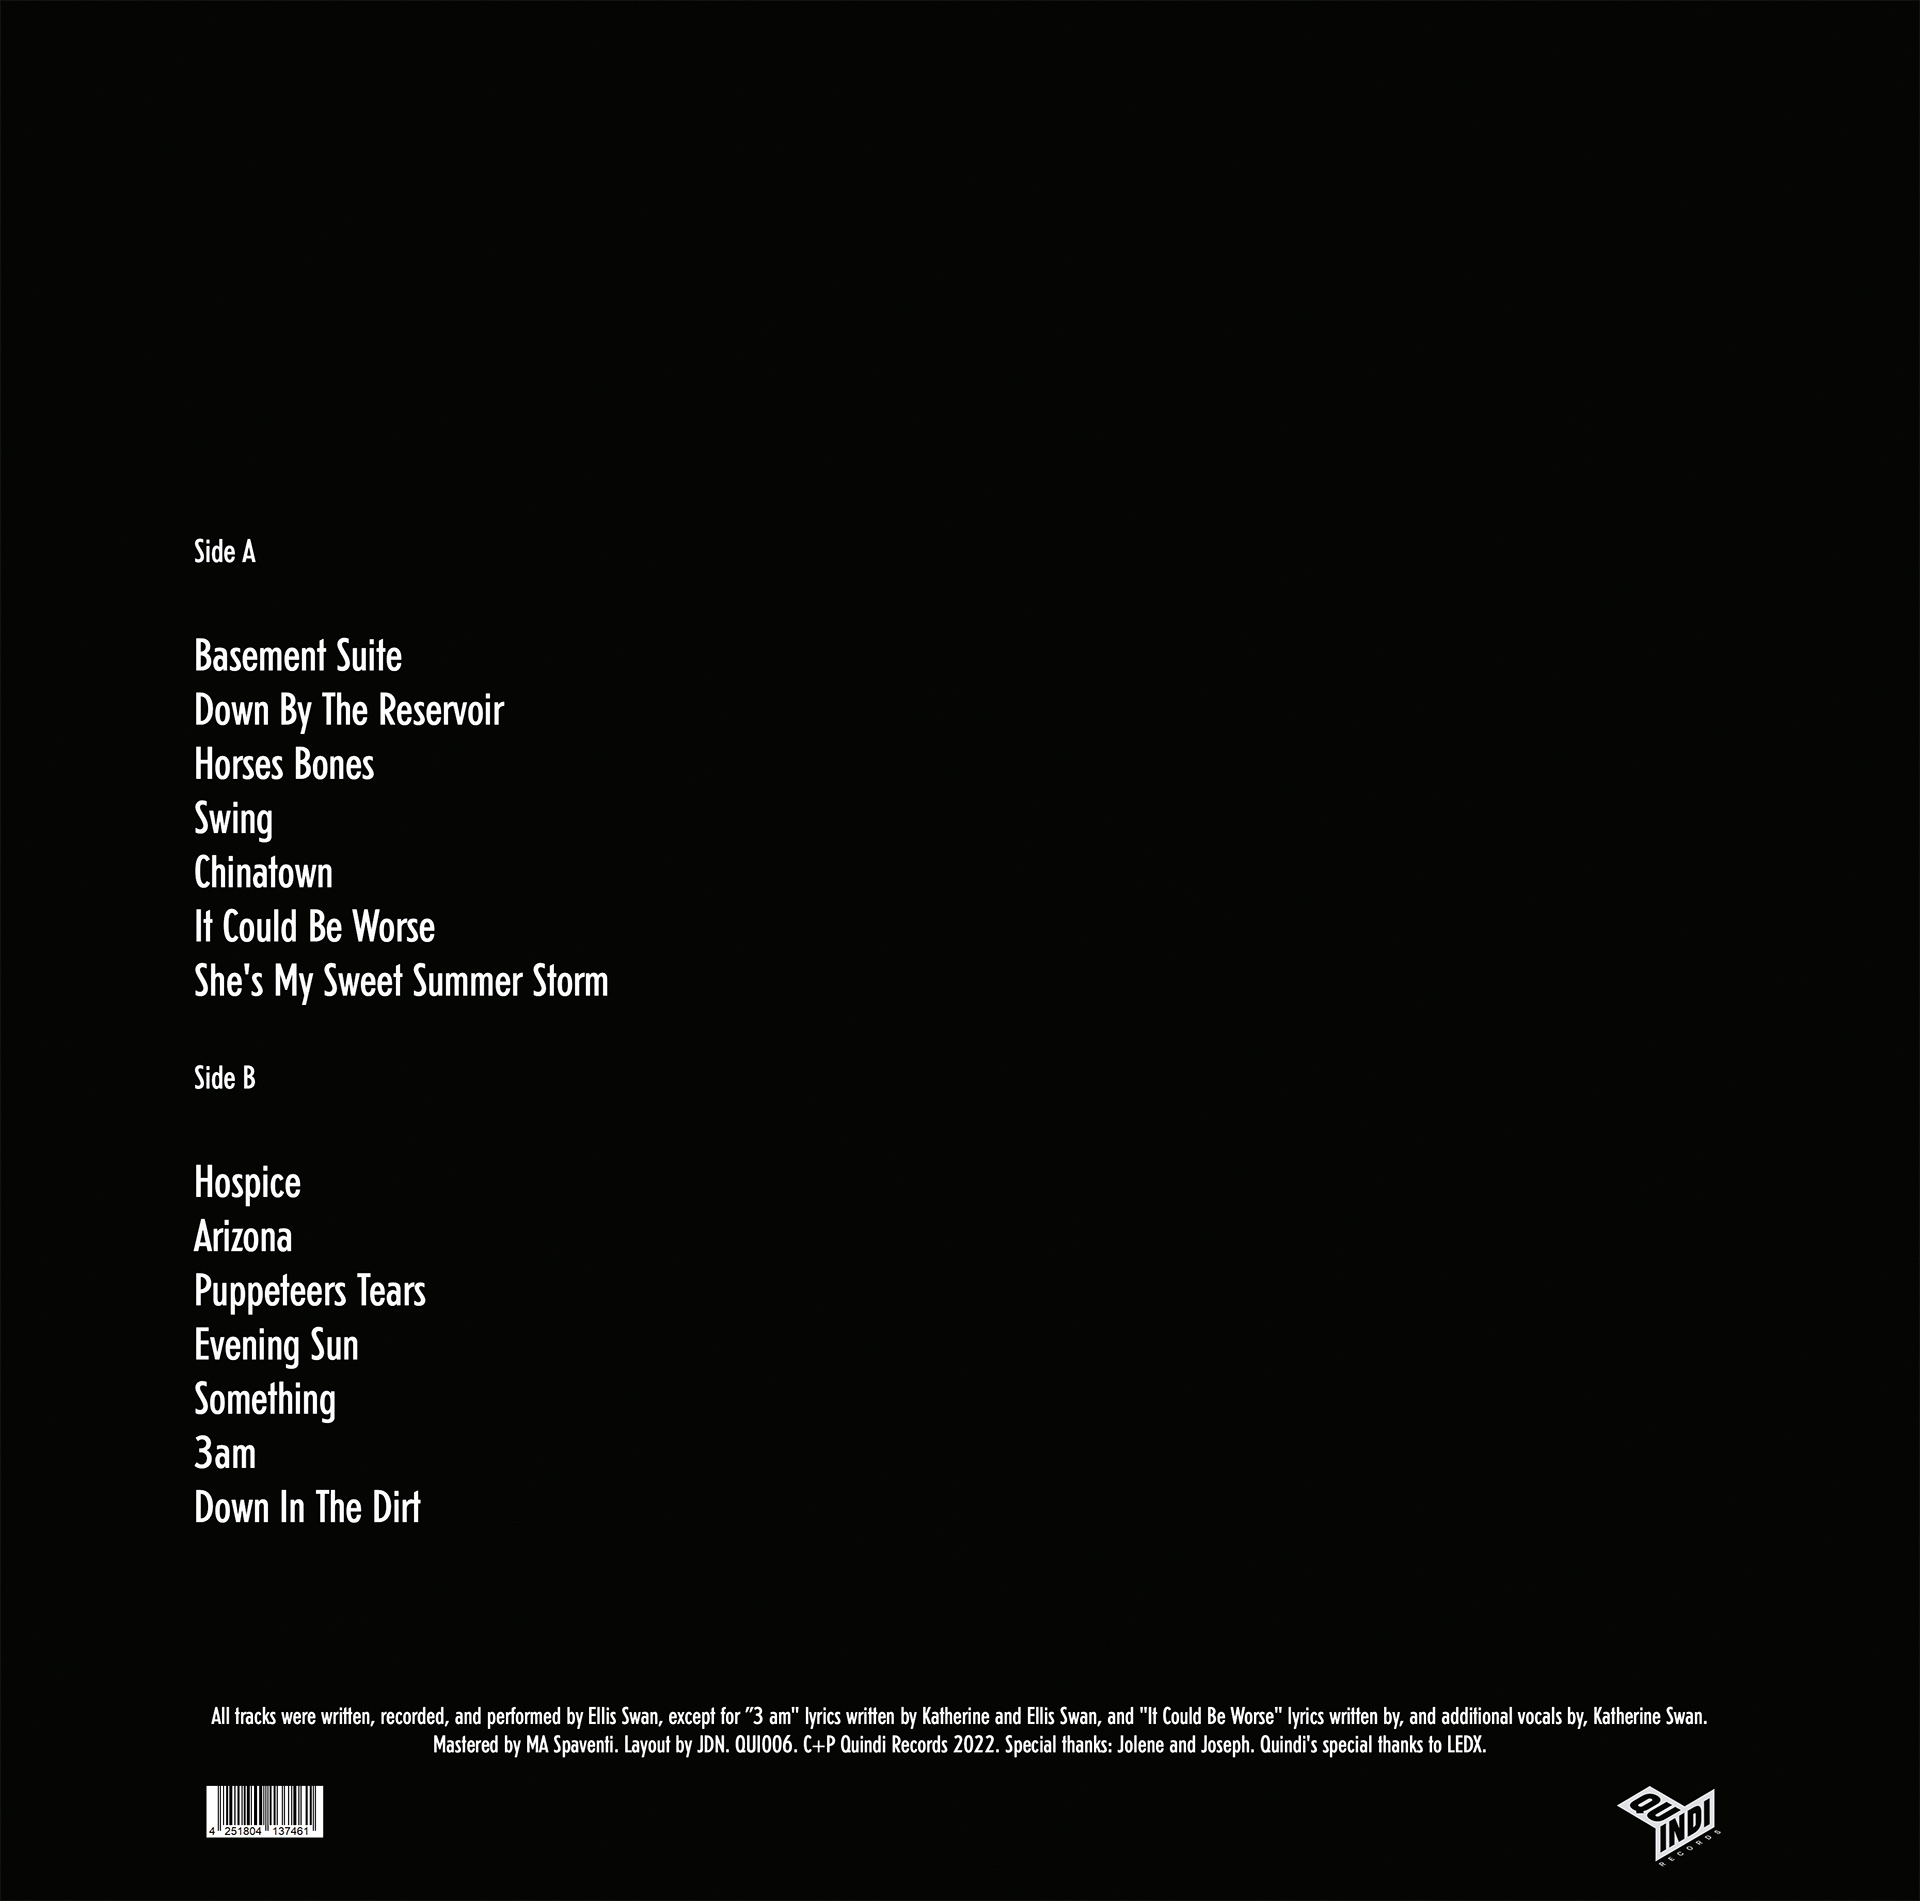 Stream Tokyo2 (DMX.RMX)  Listen to Depeche mode -Memento Mori (Club  Remixes&2023) playlist online for free on SoundCloud